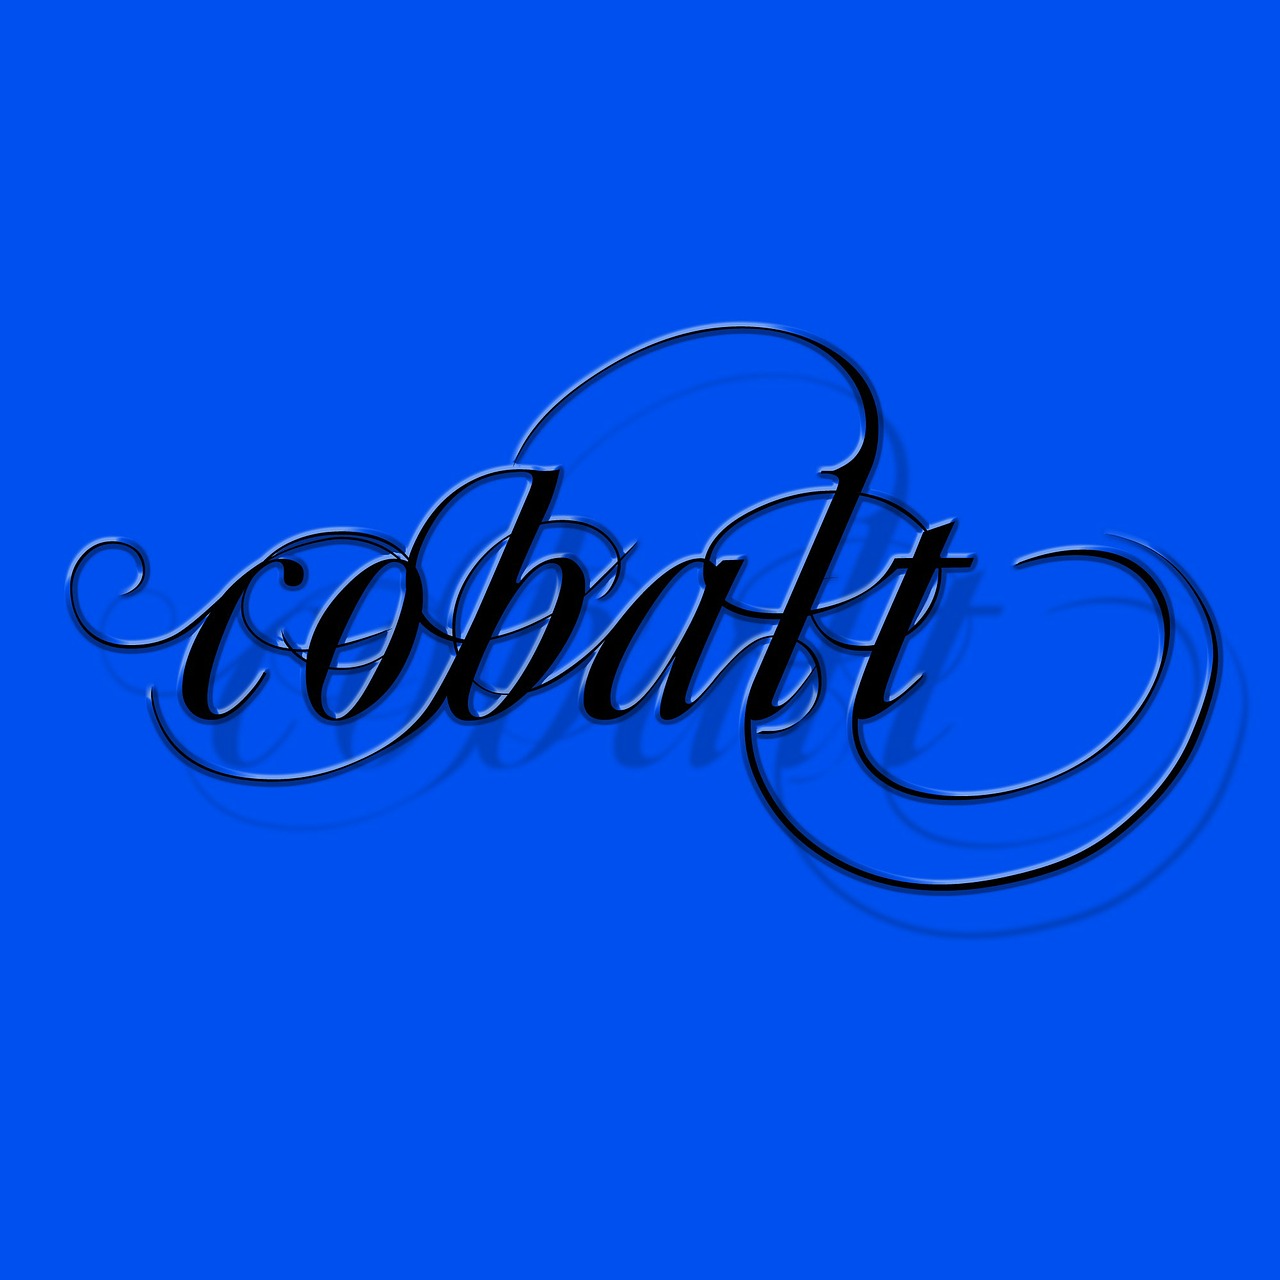 blue cobalt tile free photo